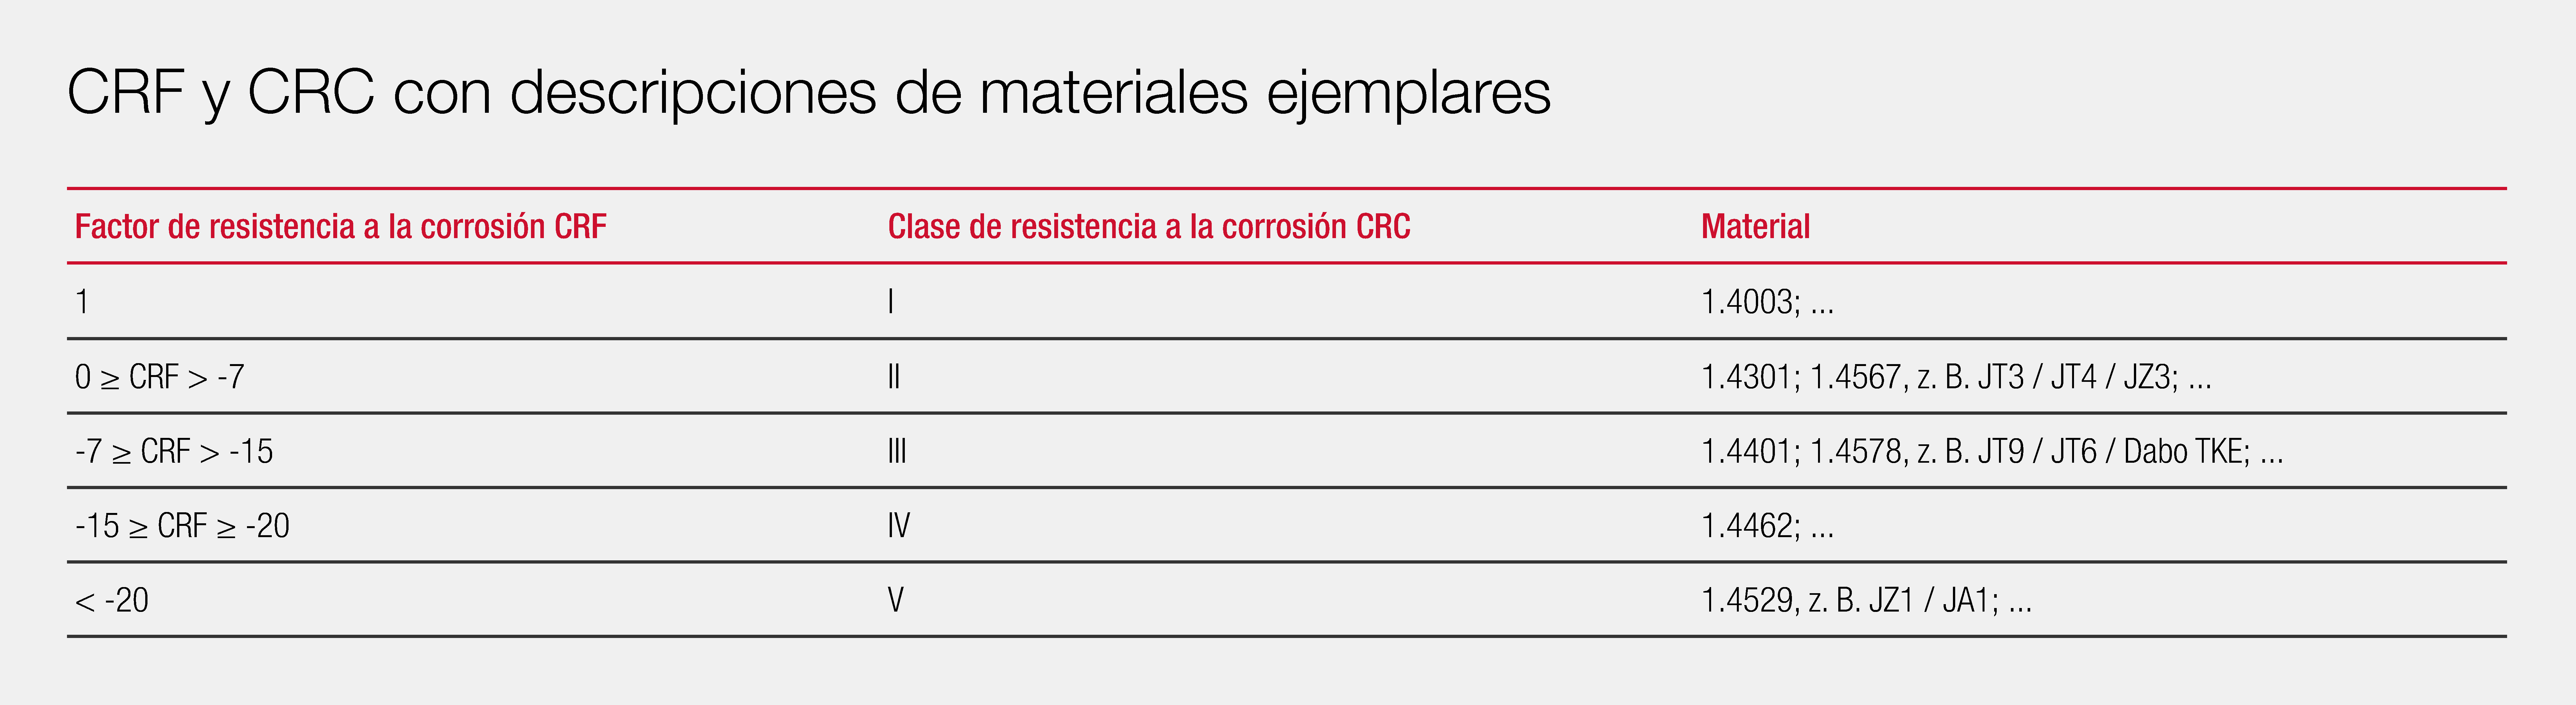 CRF_CRC_exemplary-material-description_1920x525px-EN.png